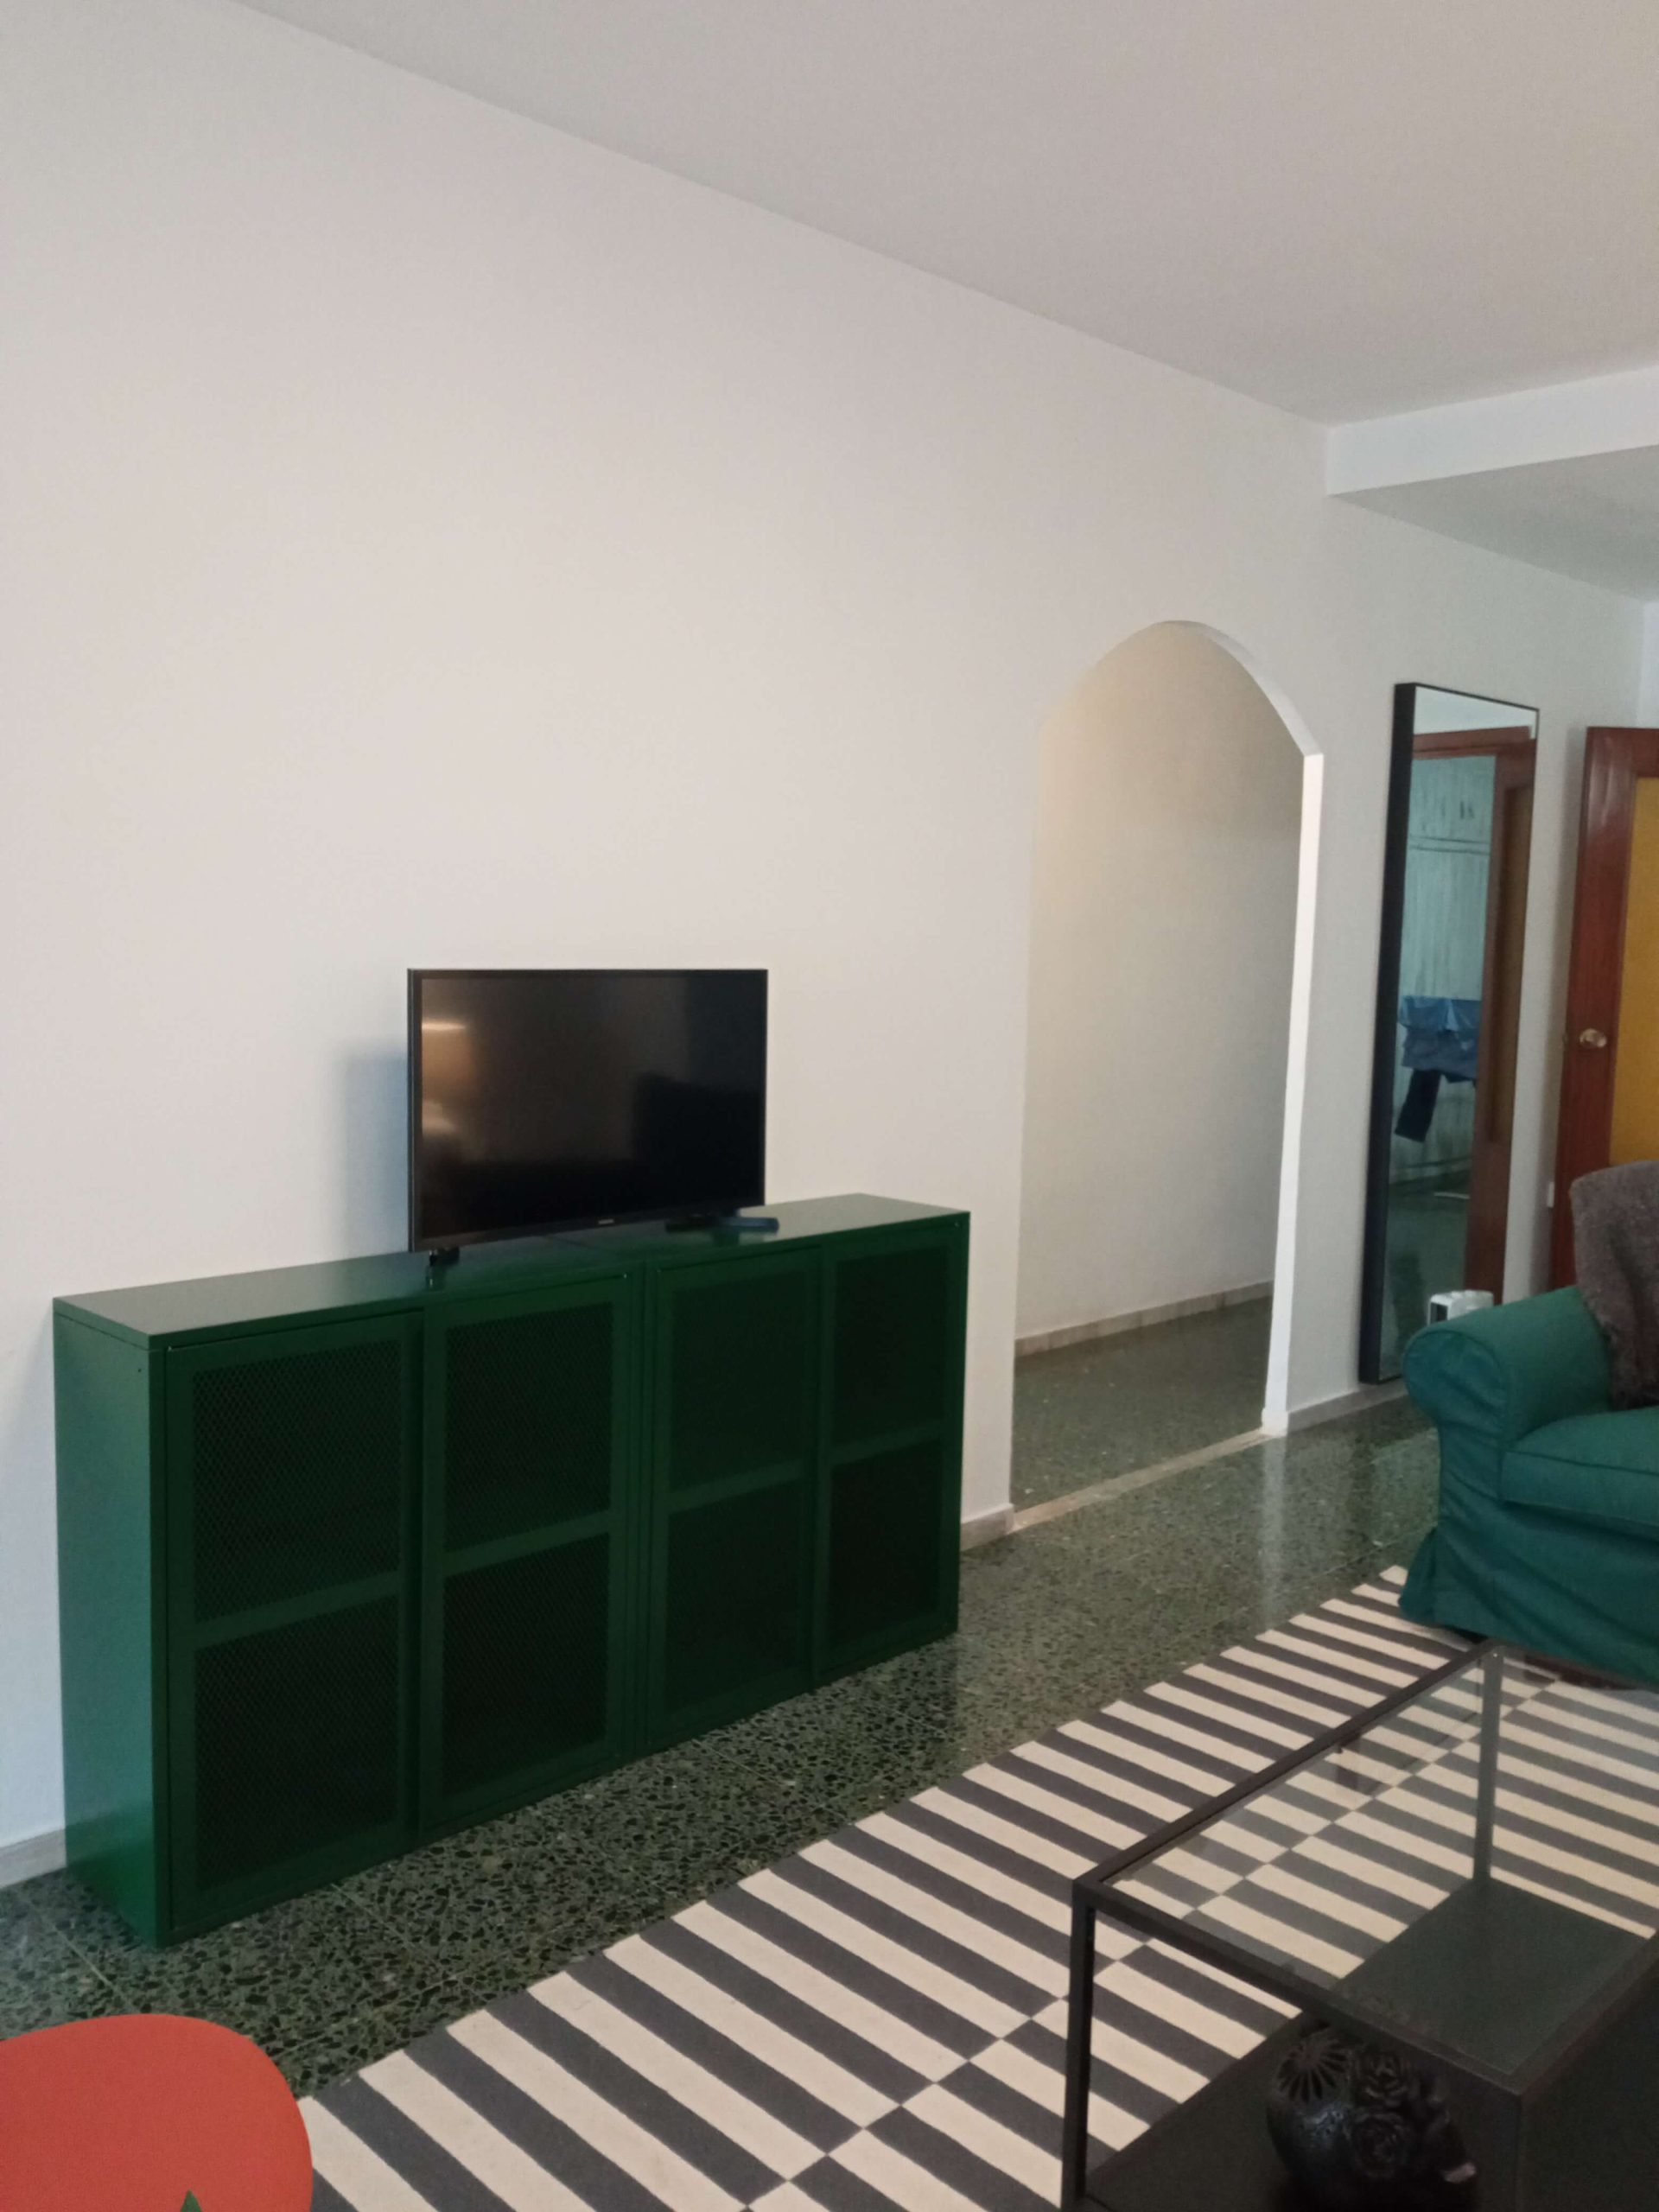 Tv apartment for rent in valencia, guillen